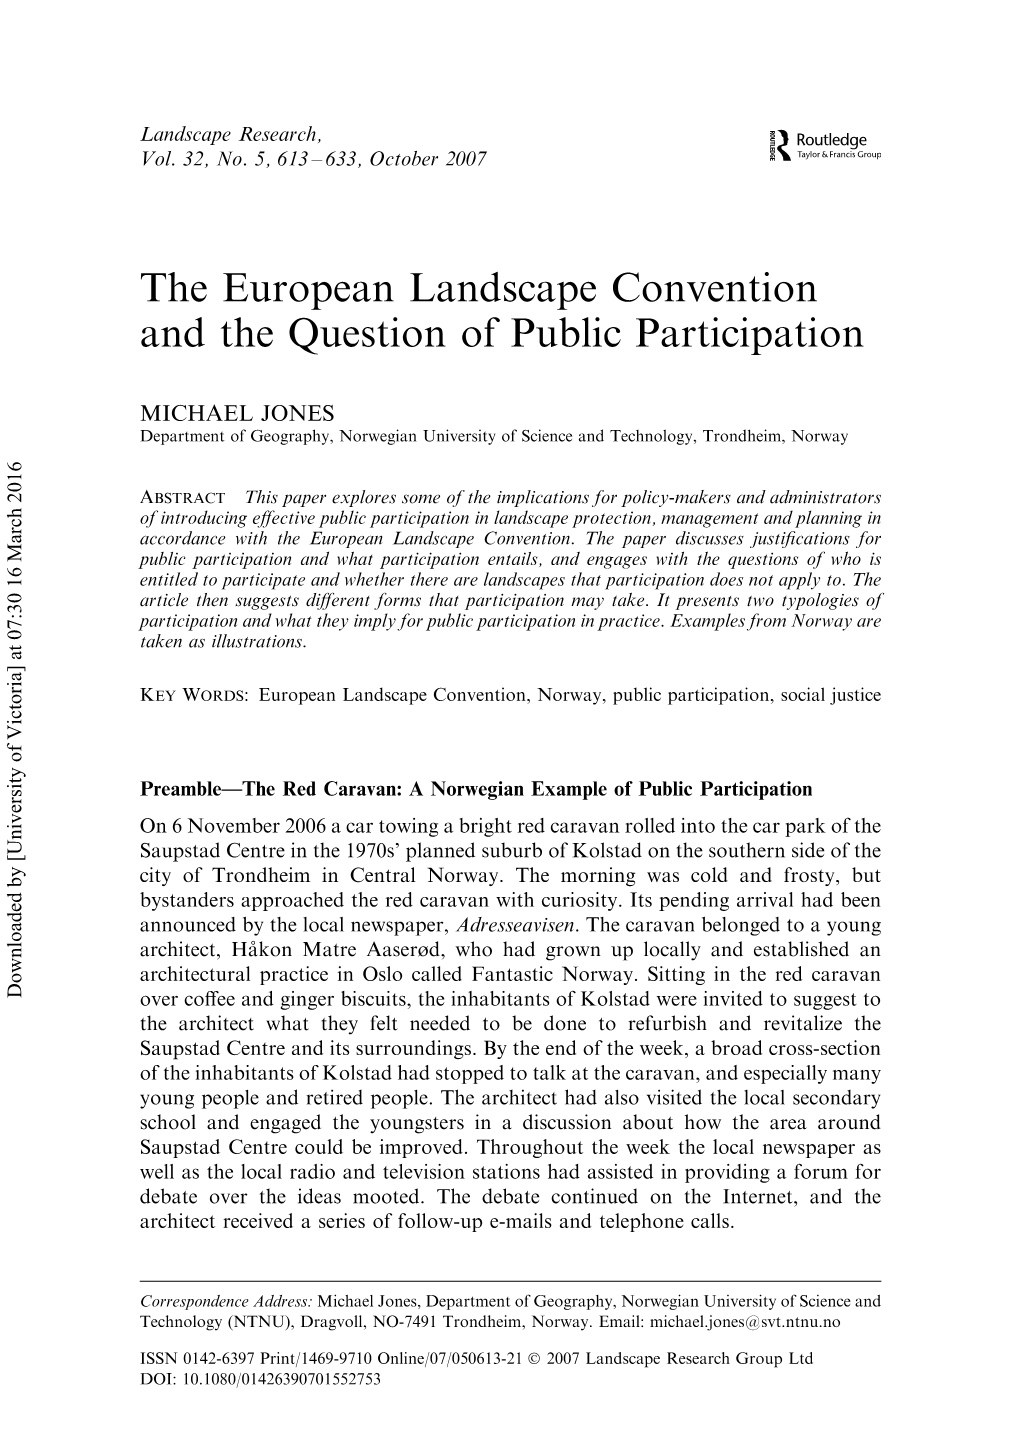 The European Landscape Convention and the Question of Public Participation